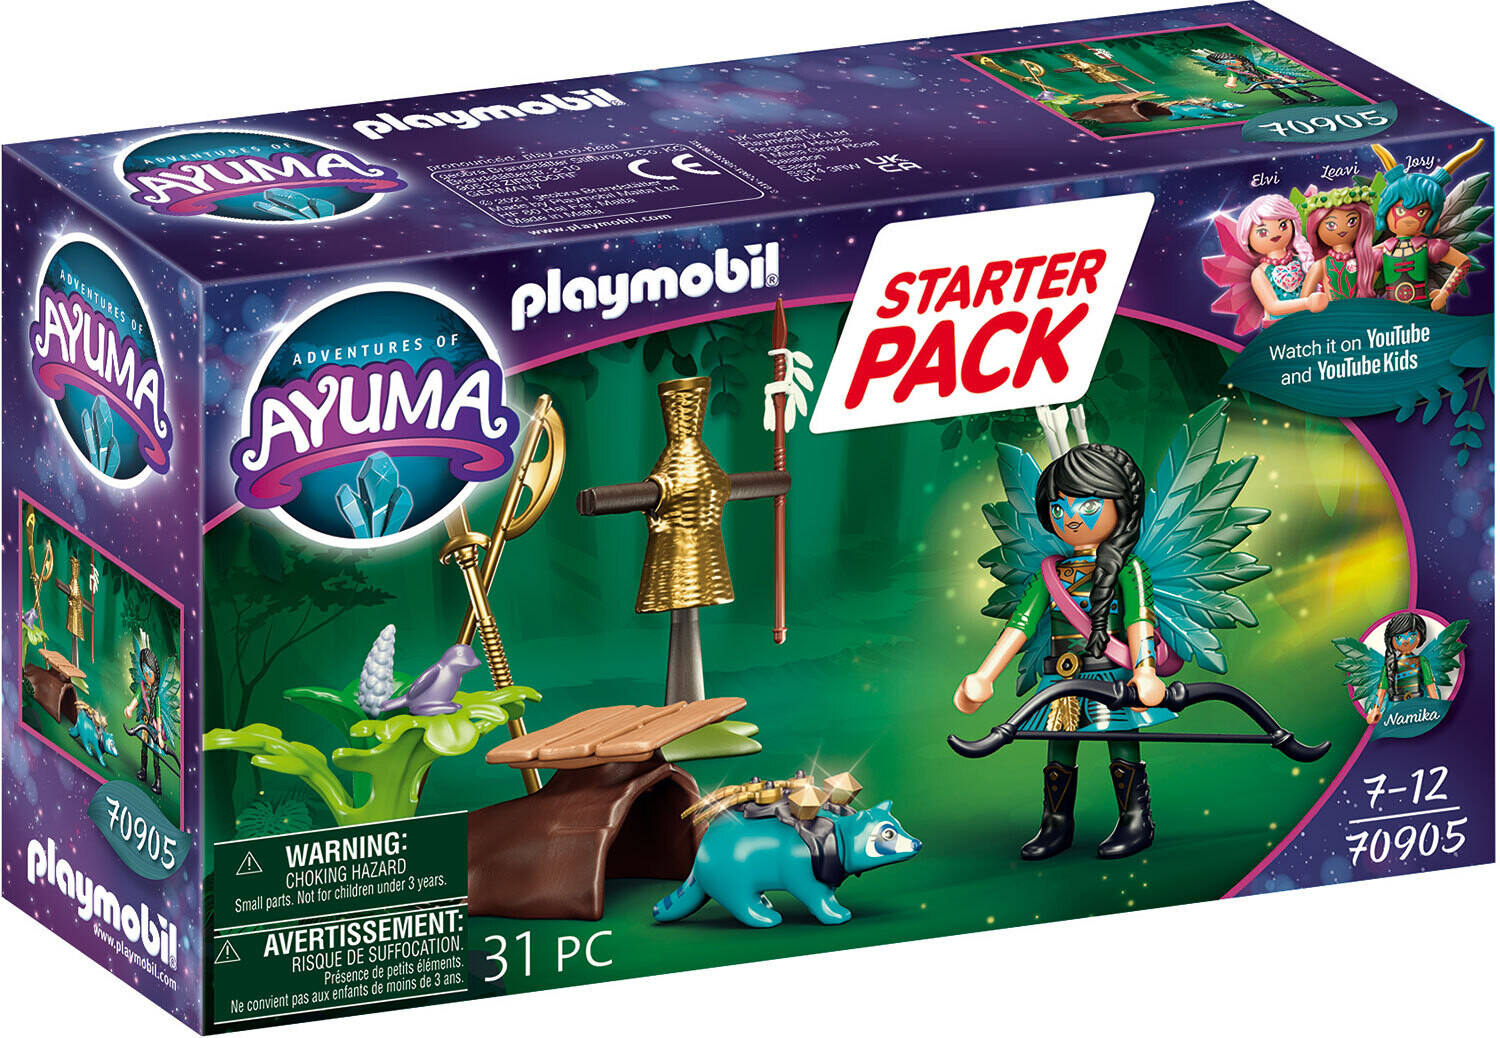 Playmobil Starter Pack Knight Fairy avec raton laveur